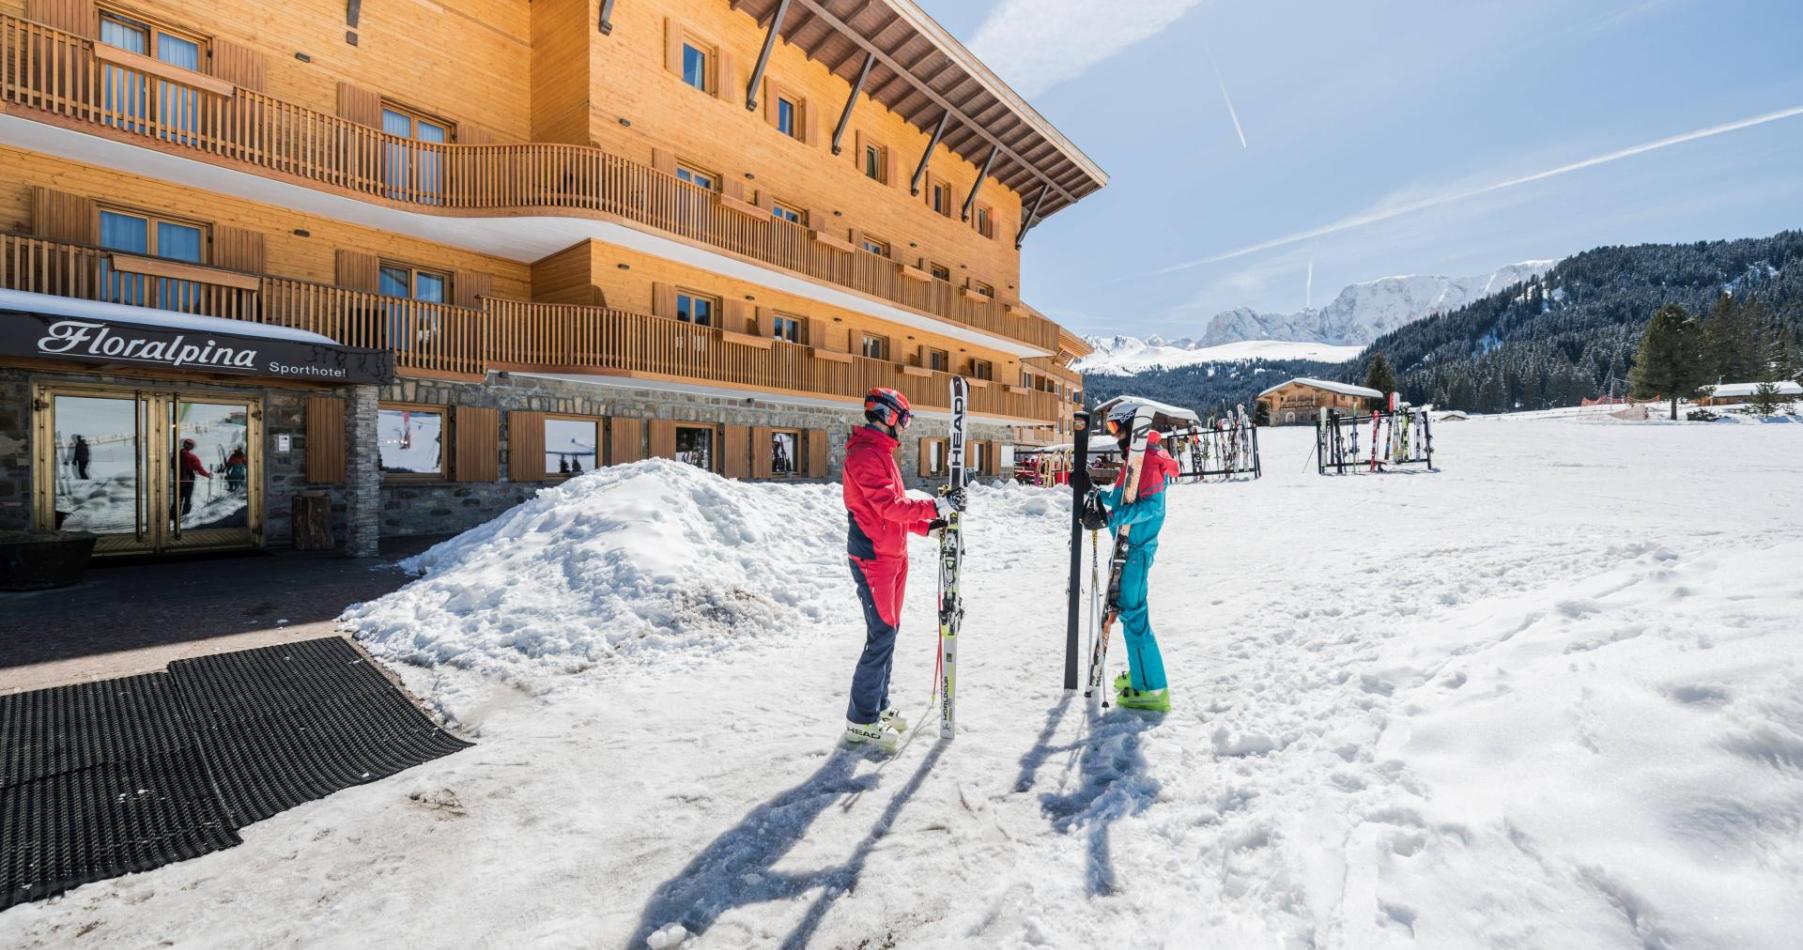 Hotel Floralpina on the ski slope